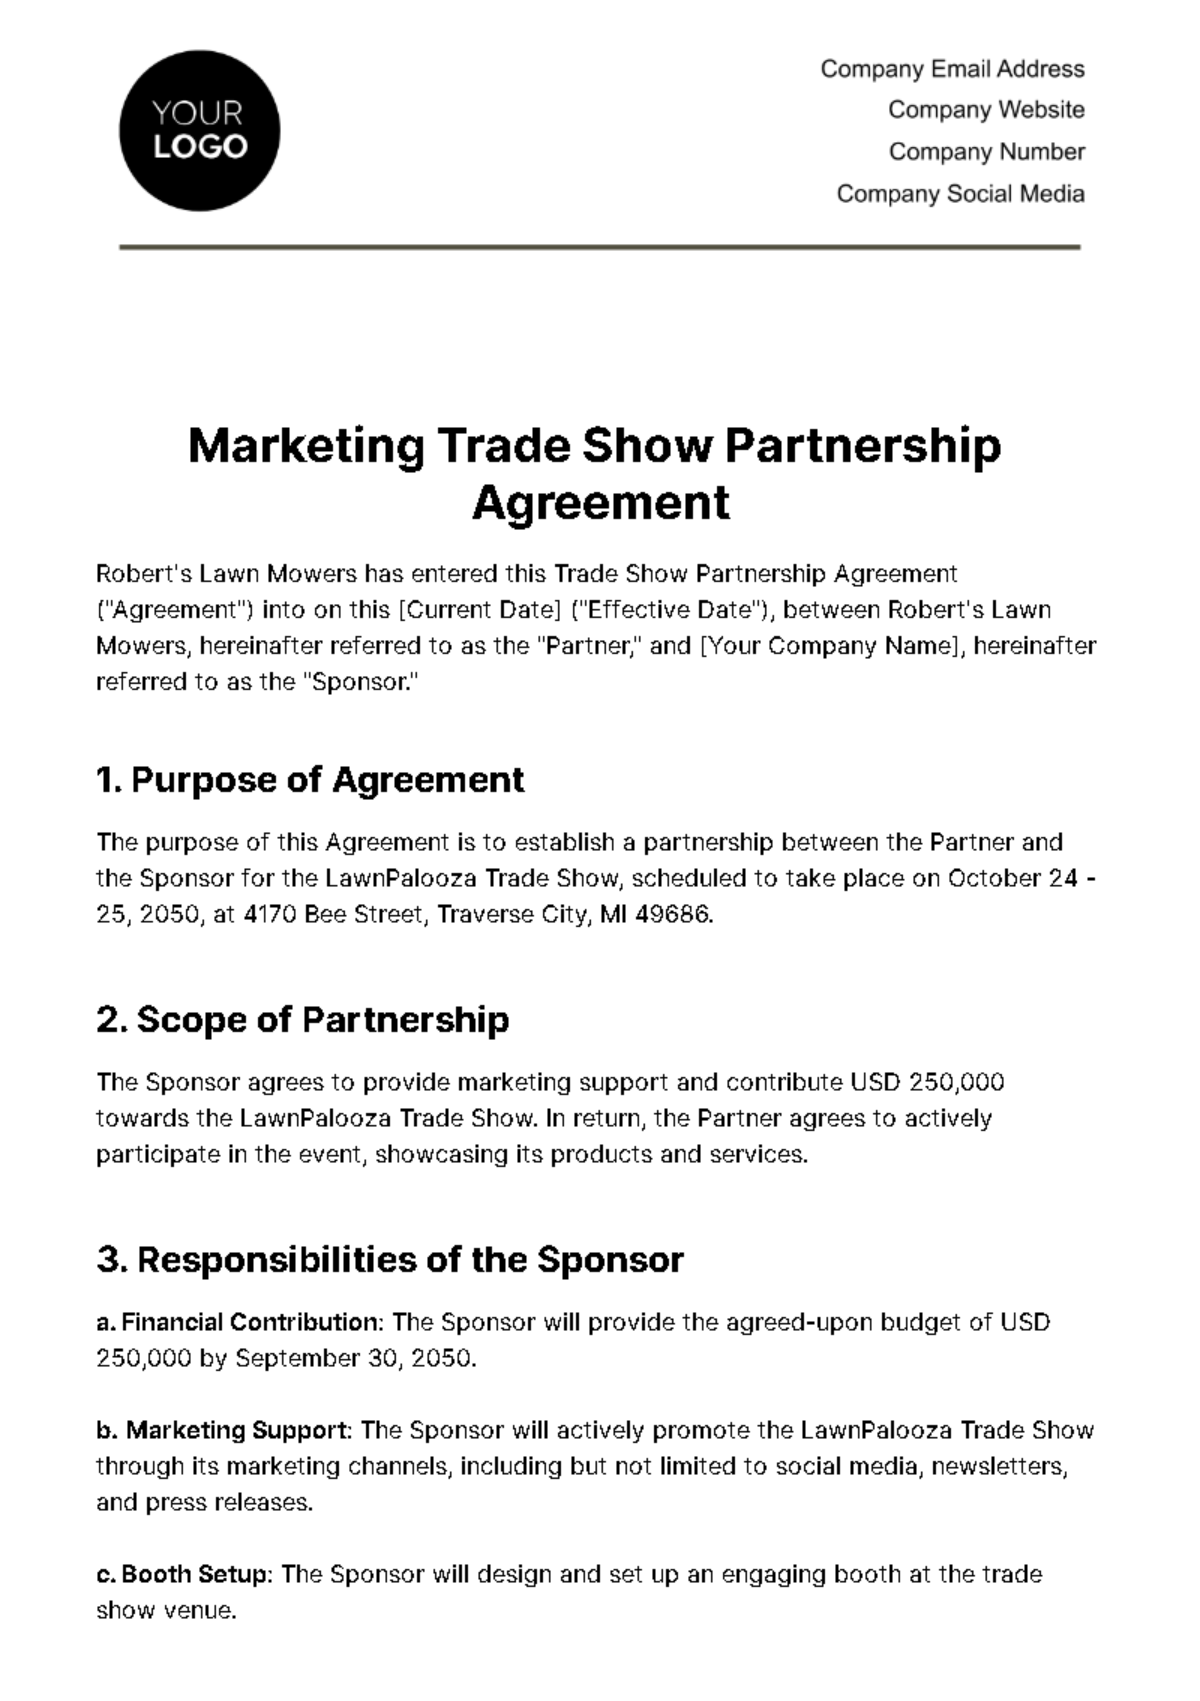 Free Marketing Trade Show Partnership Agreement Template